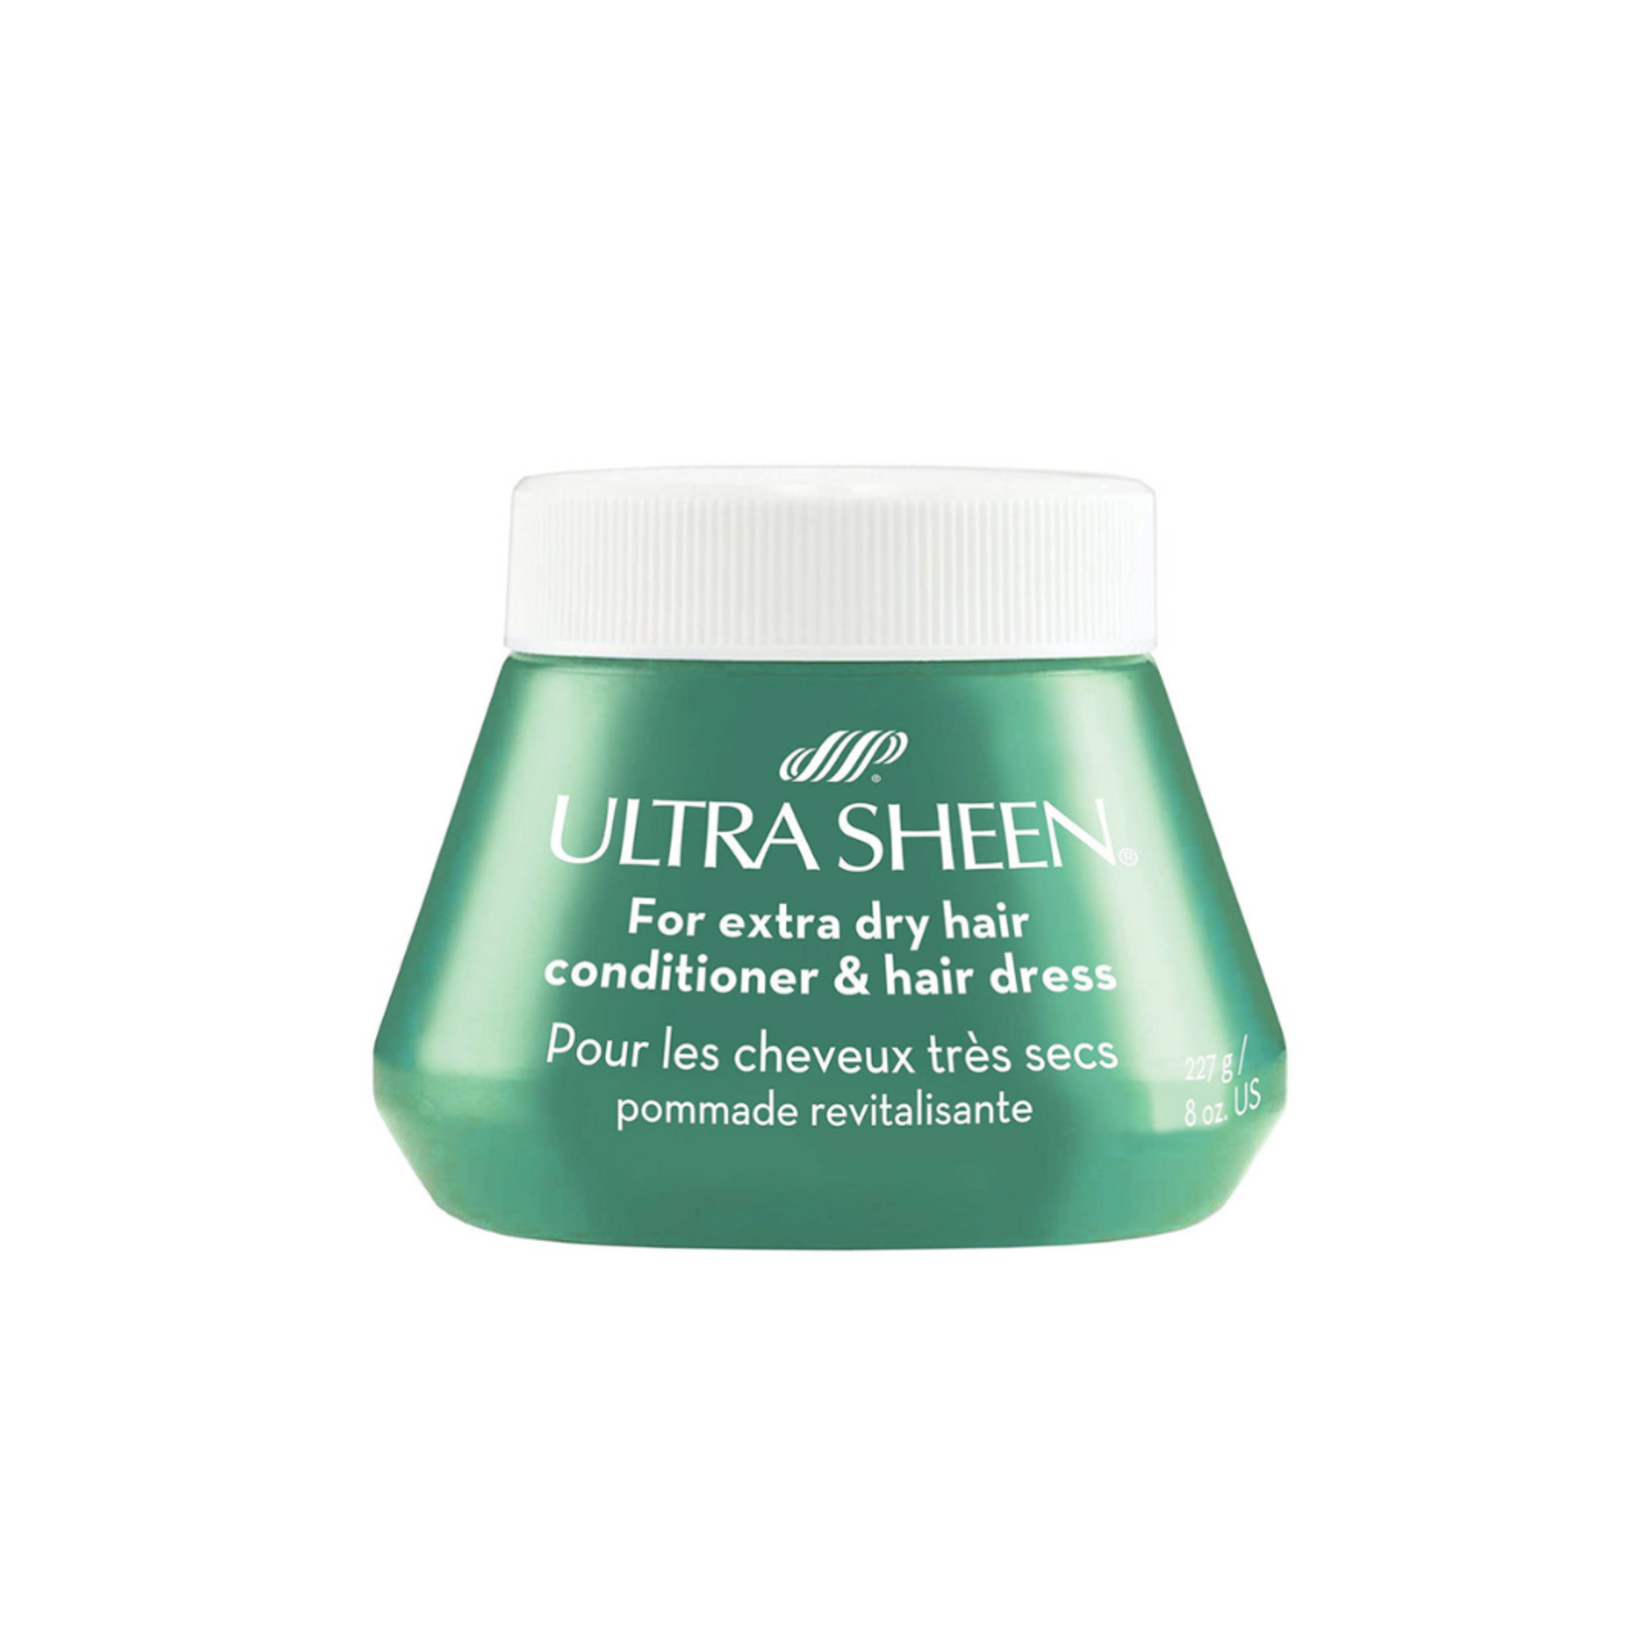 Ultra Sheen Ultra Sheen Conditioner & Hair Dress for extra dry hair hair 8oz